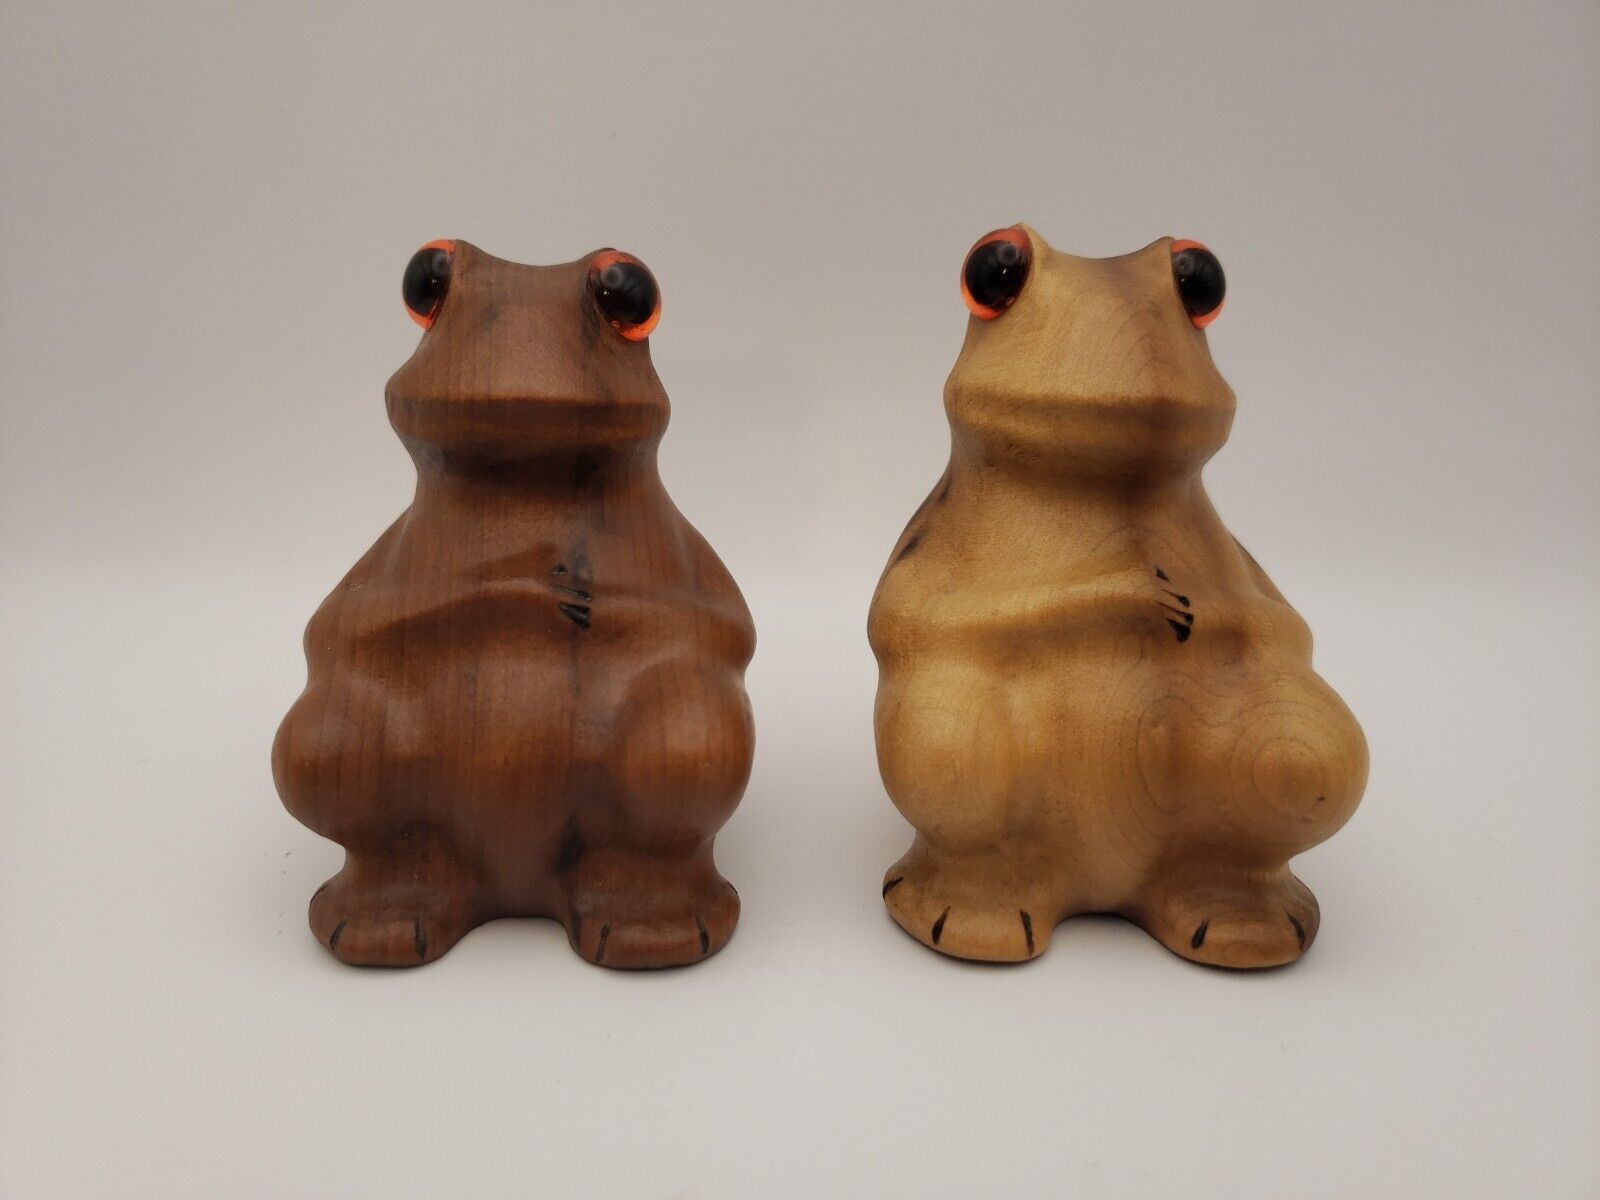 Pair of Wood Carved Sitting Frog Figures Big Eyes Signed